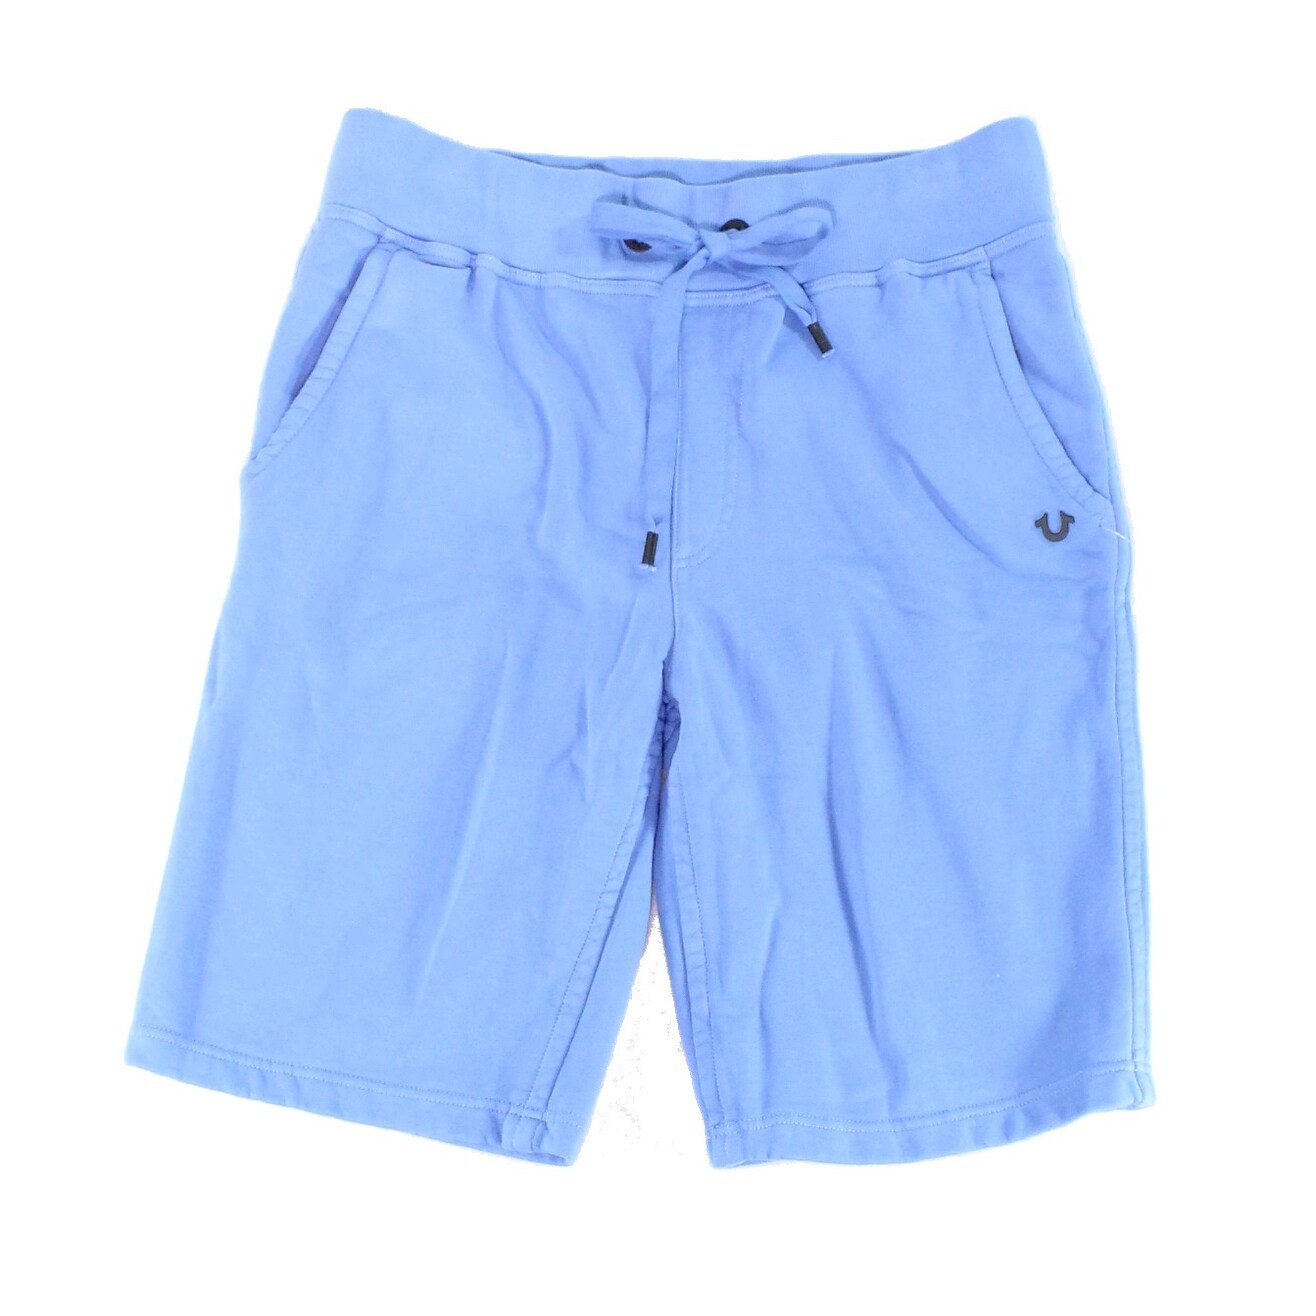 blue true religion shorts